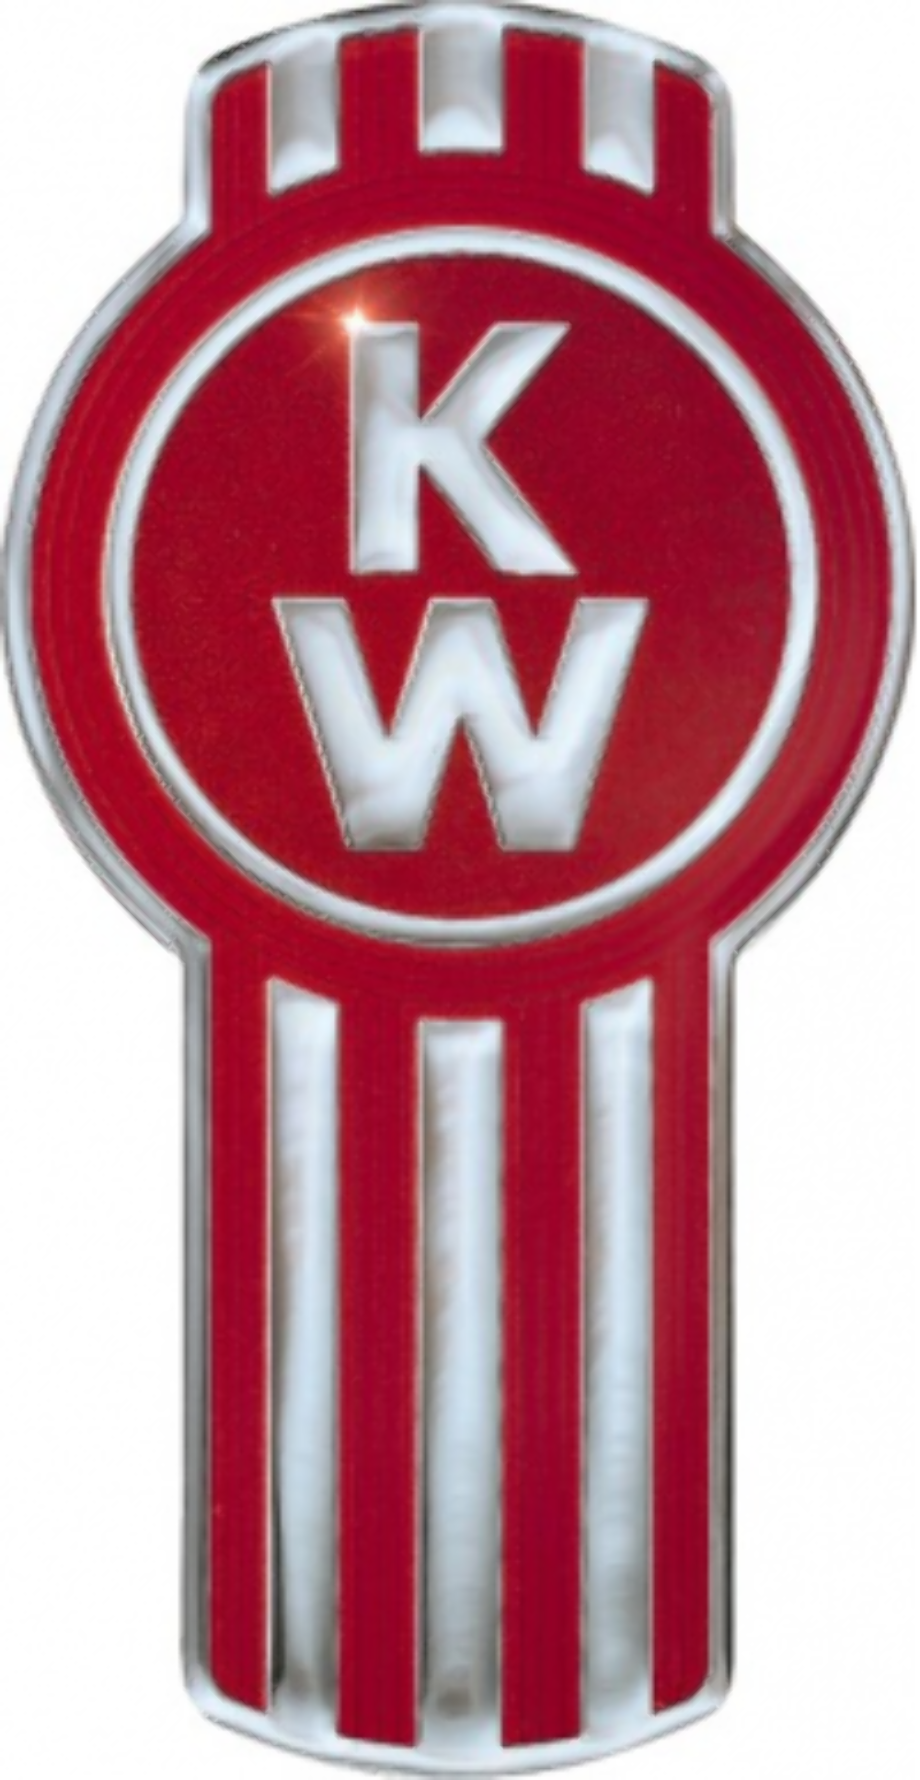 Download High Quality kenworth logo semi truck Transparent PNG Images